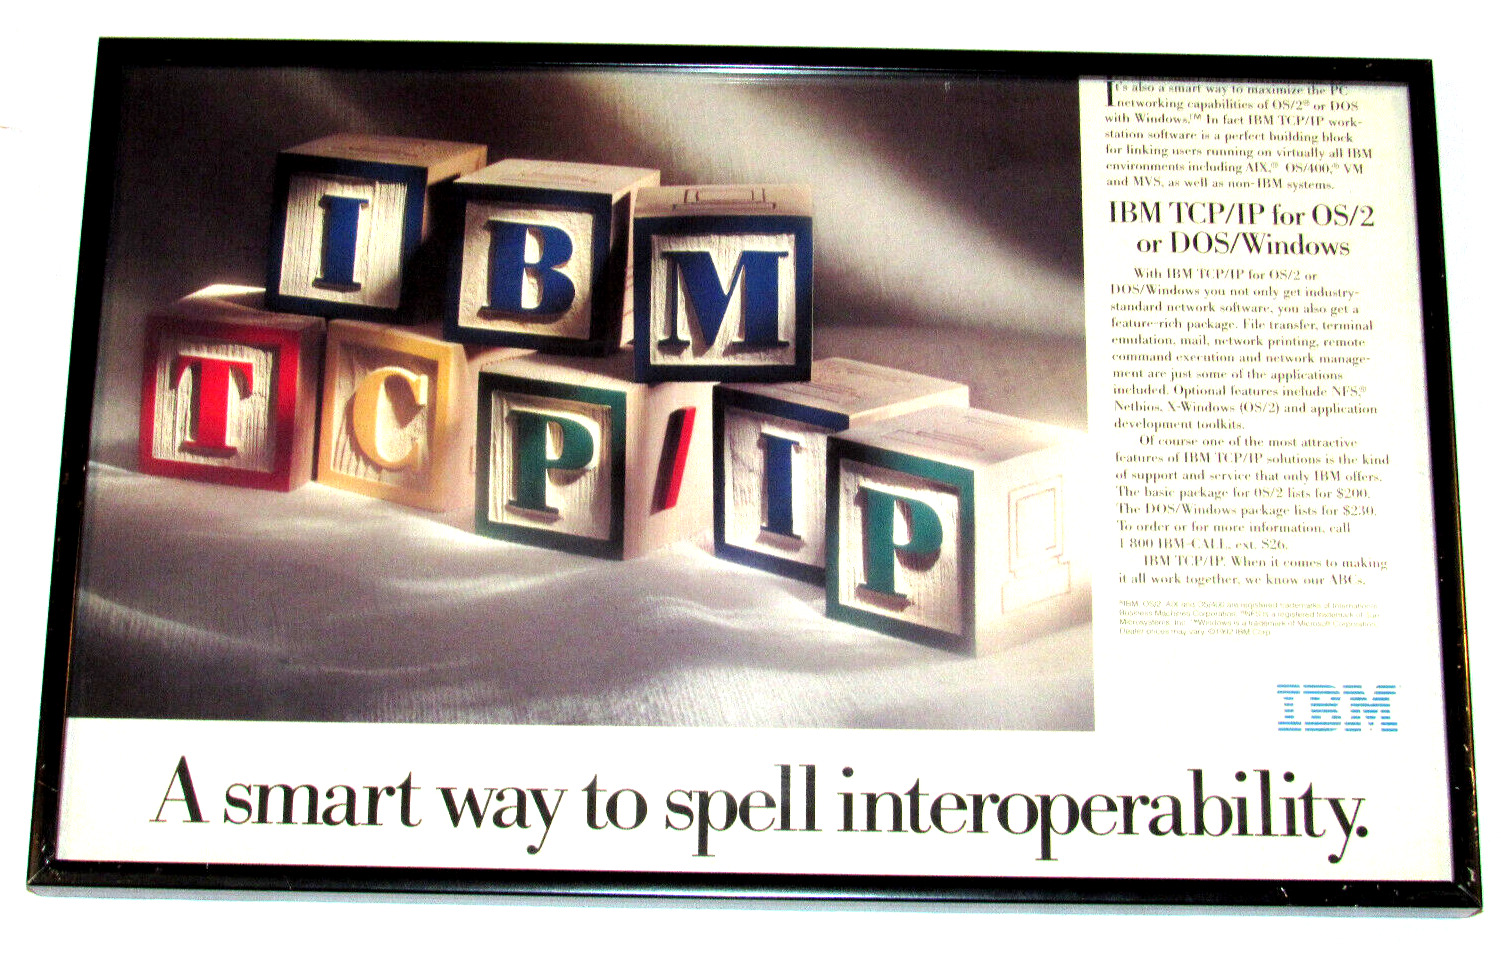 VINTAGE 1992 IBM TCP/IP ADVERTISING POSTER PROF FRAMED FOR OS2 OR DOS/WINDOWS